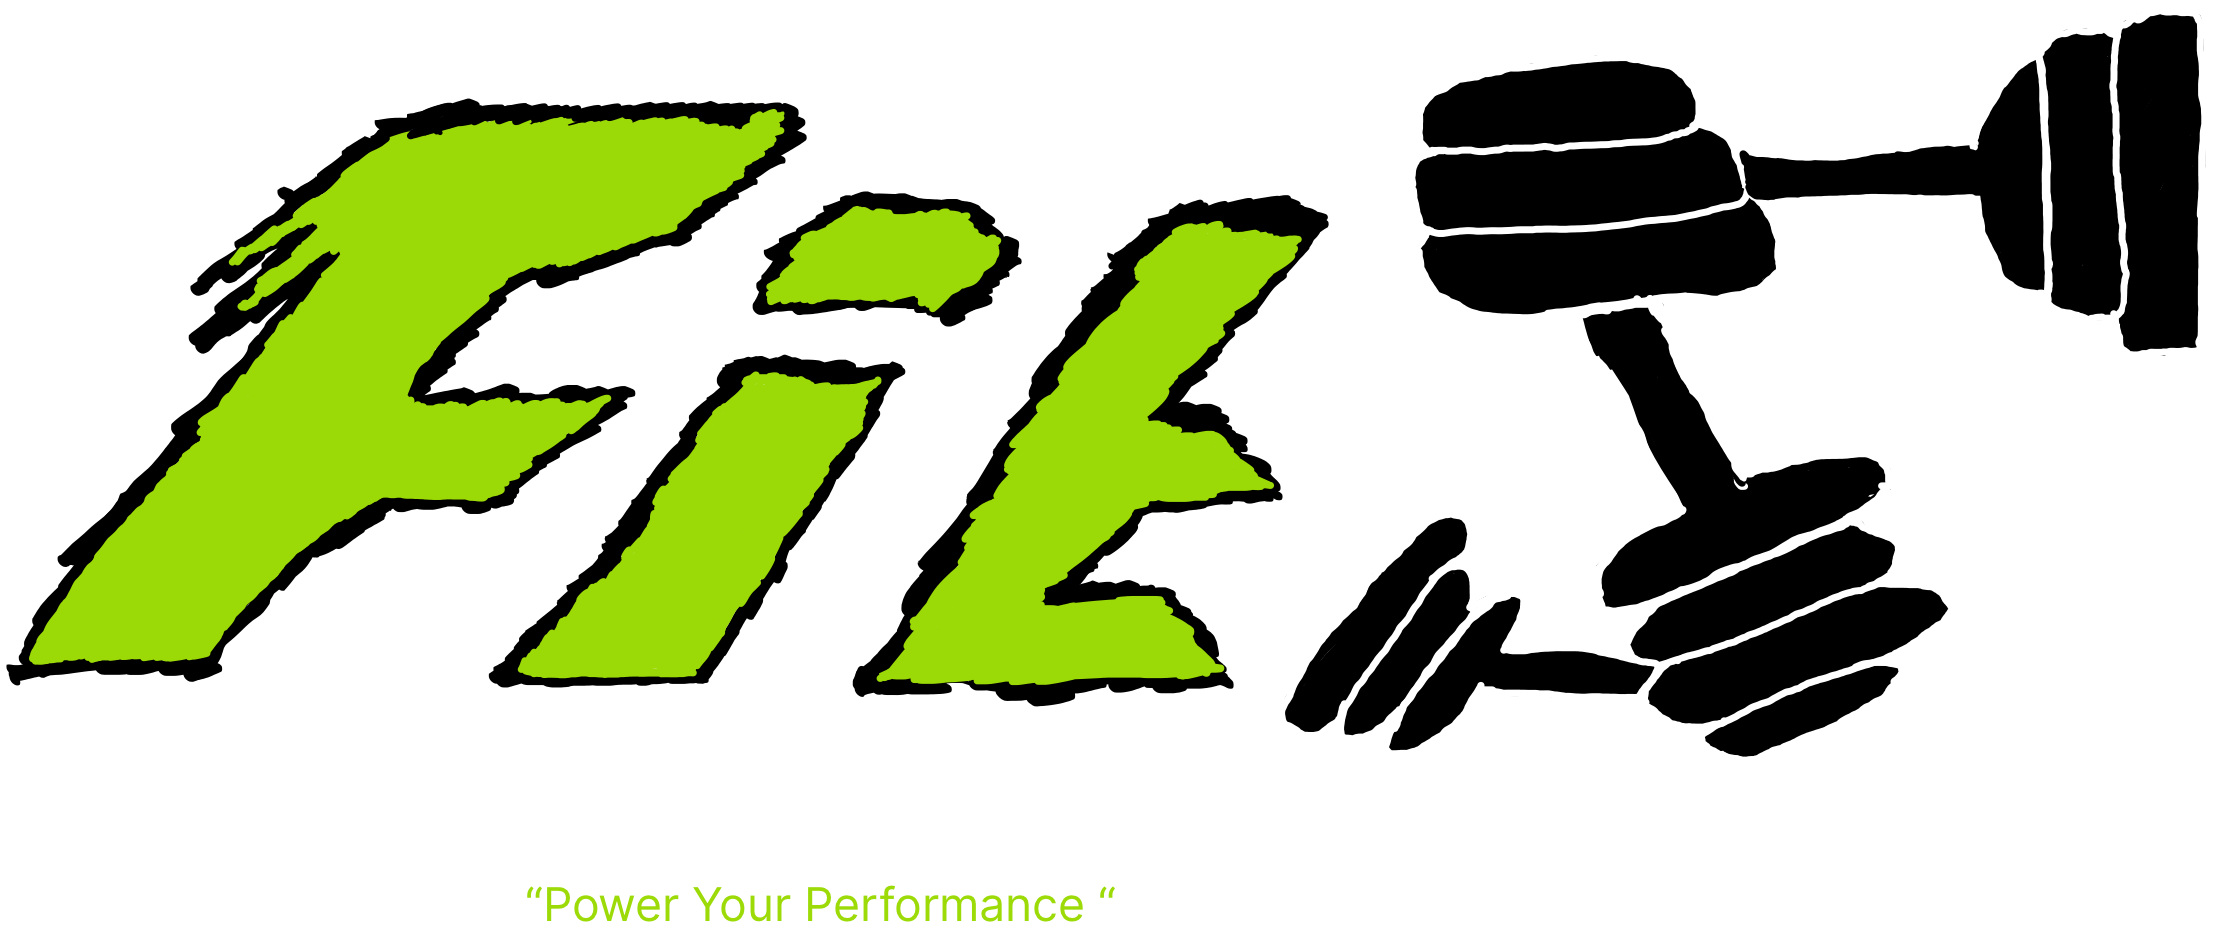 Fitz logo